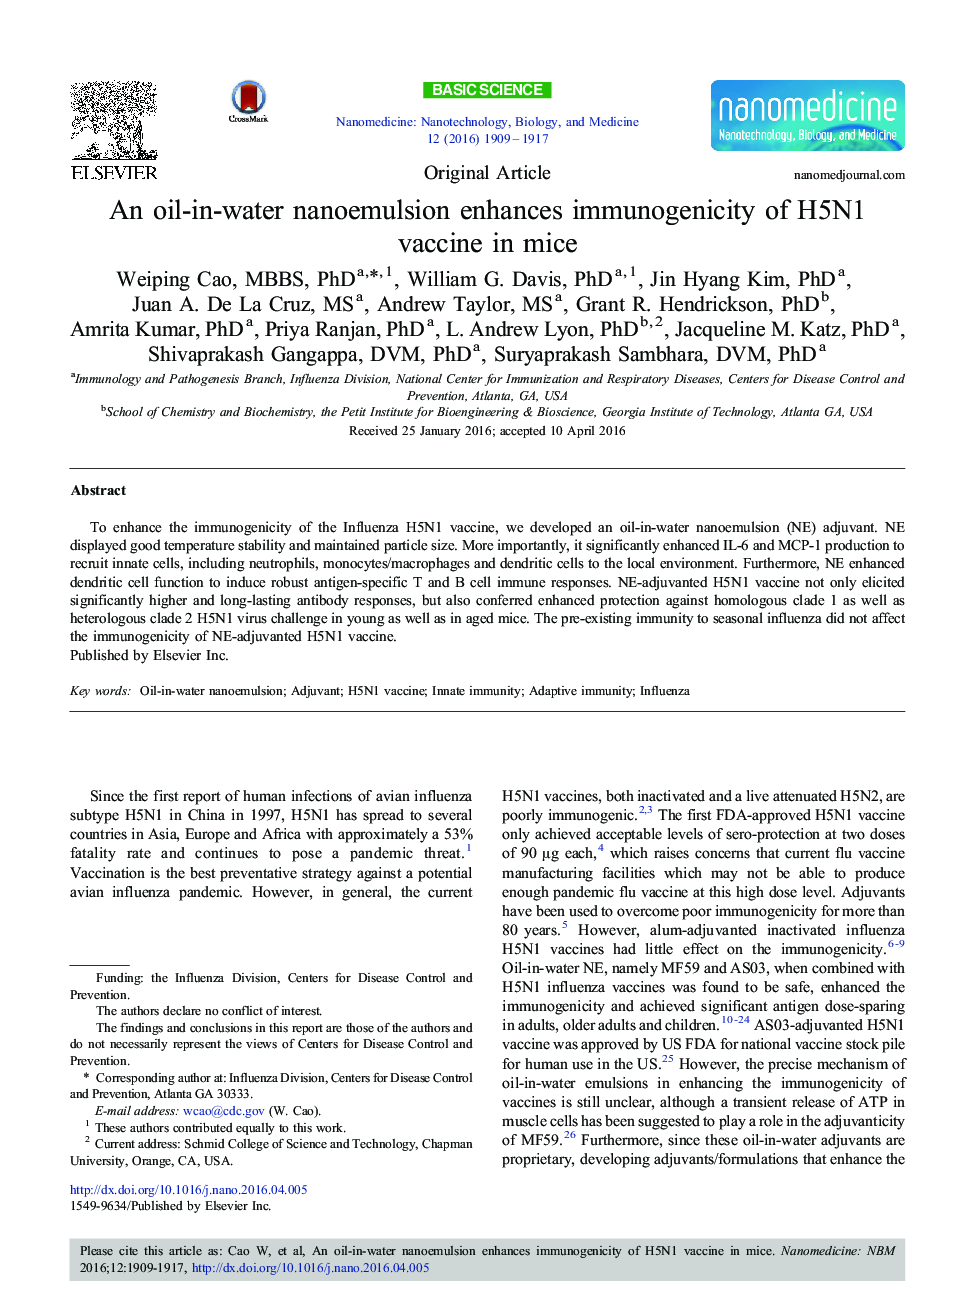 An oil-in-water nanoemulsion enhances immunogenicity of H5N1 vaccine in mice